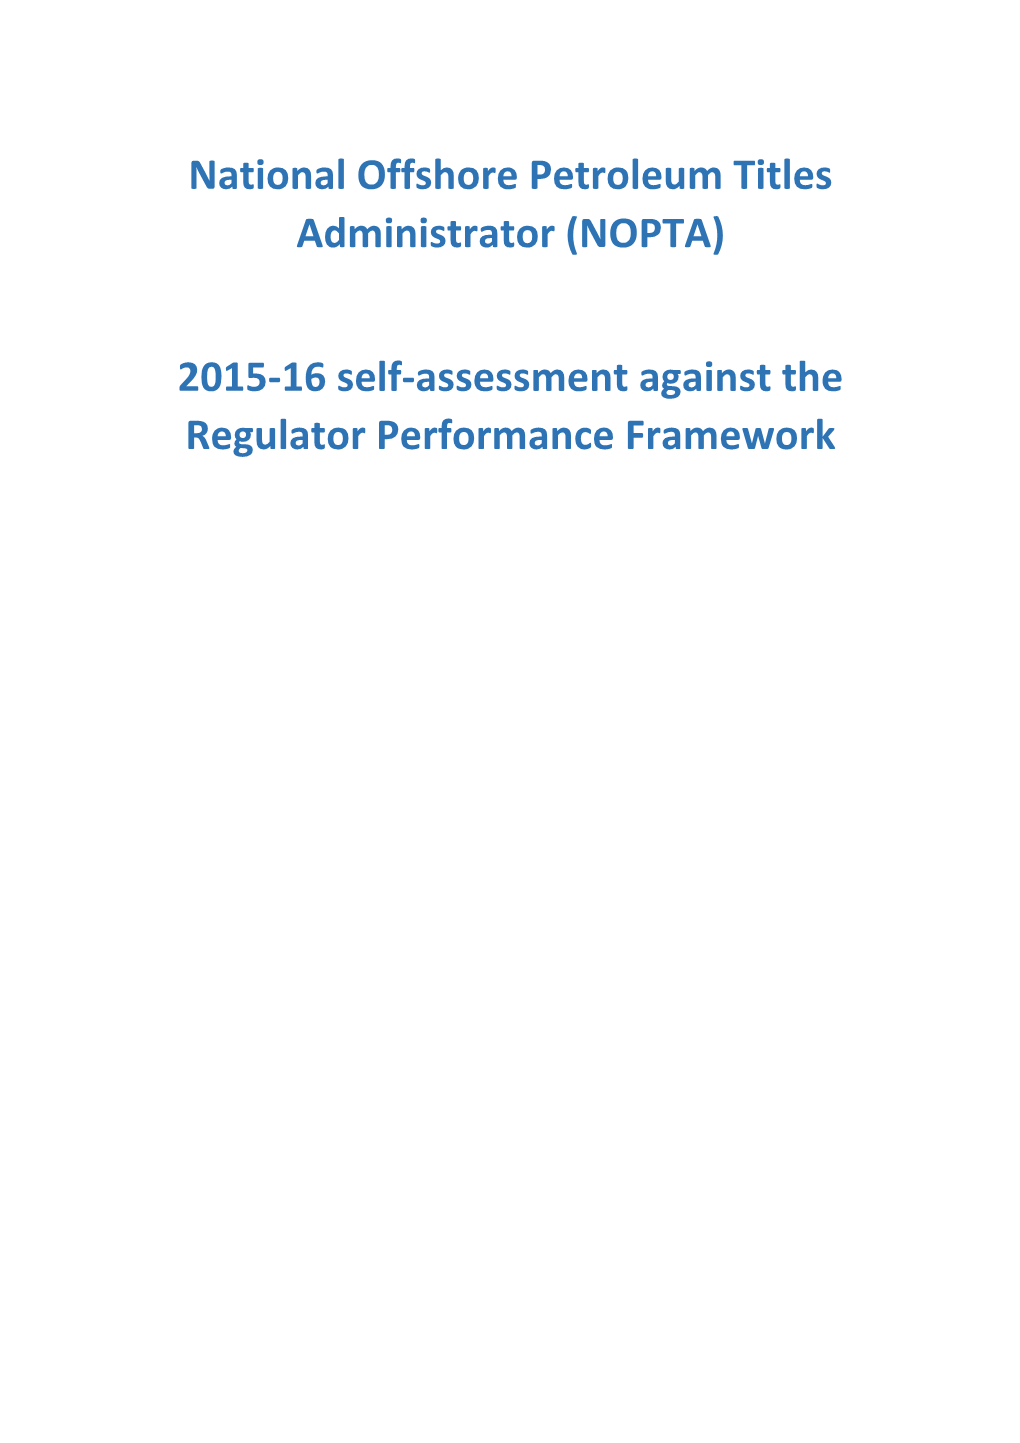 NOPTA 2015-16 Self Assessment Against the Regulator Performance Framework